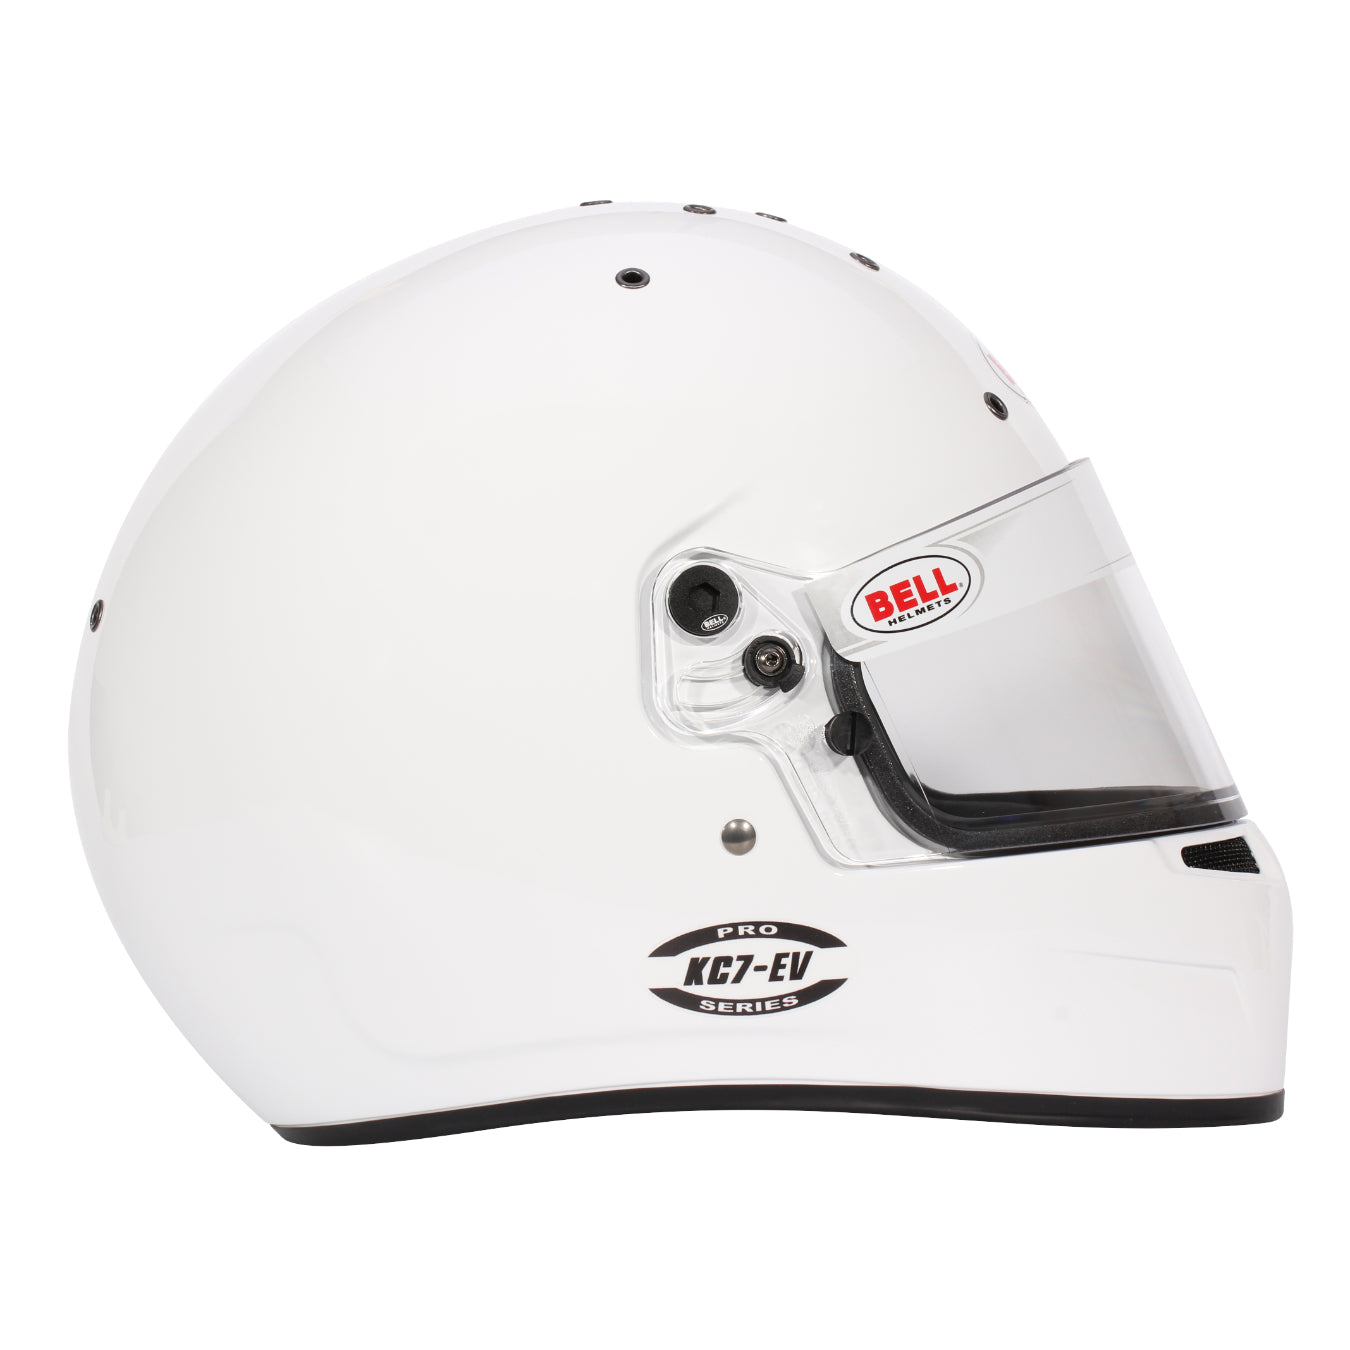 BELL KC7-EV CMR karting helmet